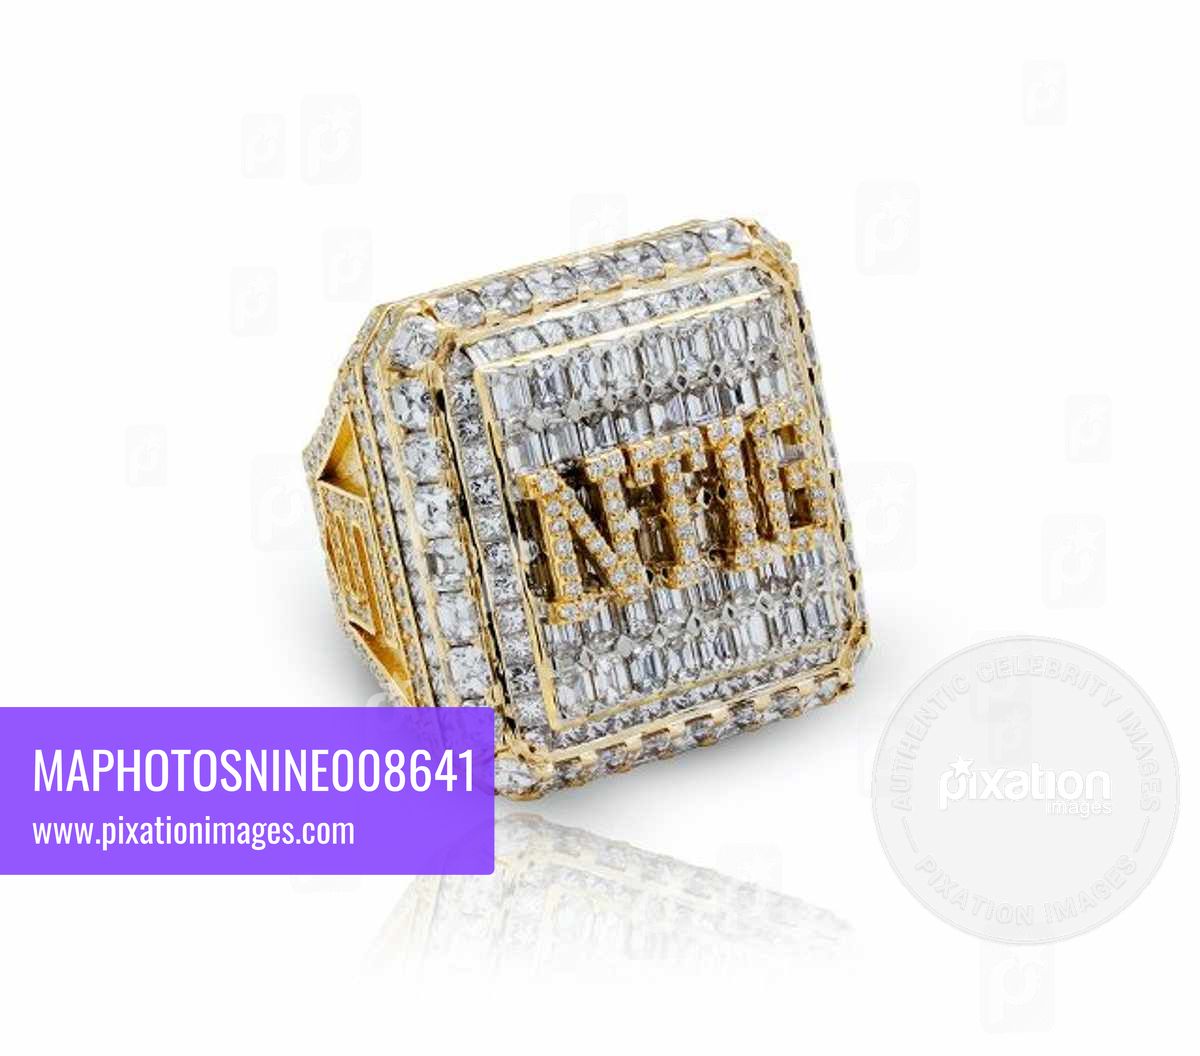 Drake gifts $50,000 diamond rings to rec league basketball teammates to celebrate championship